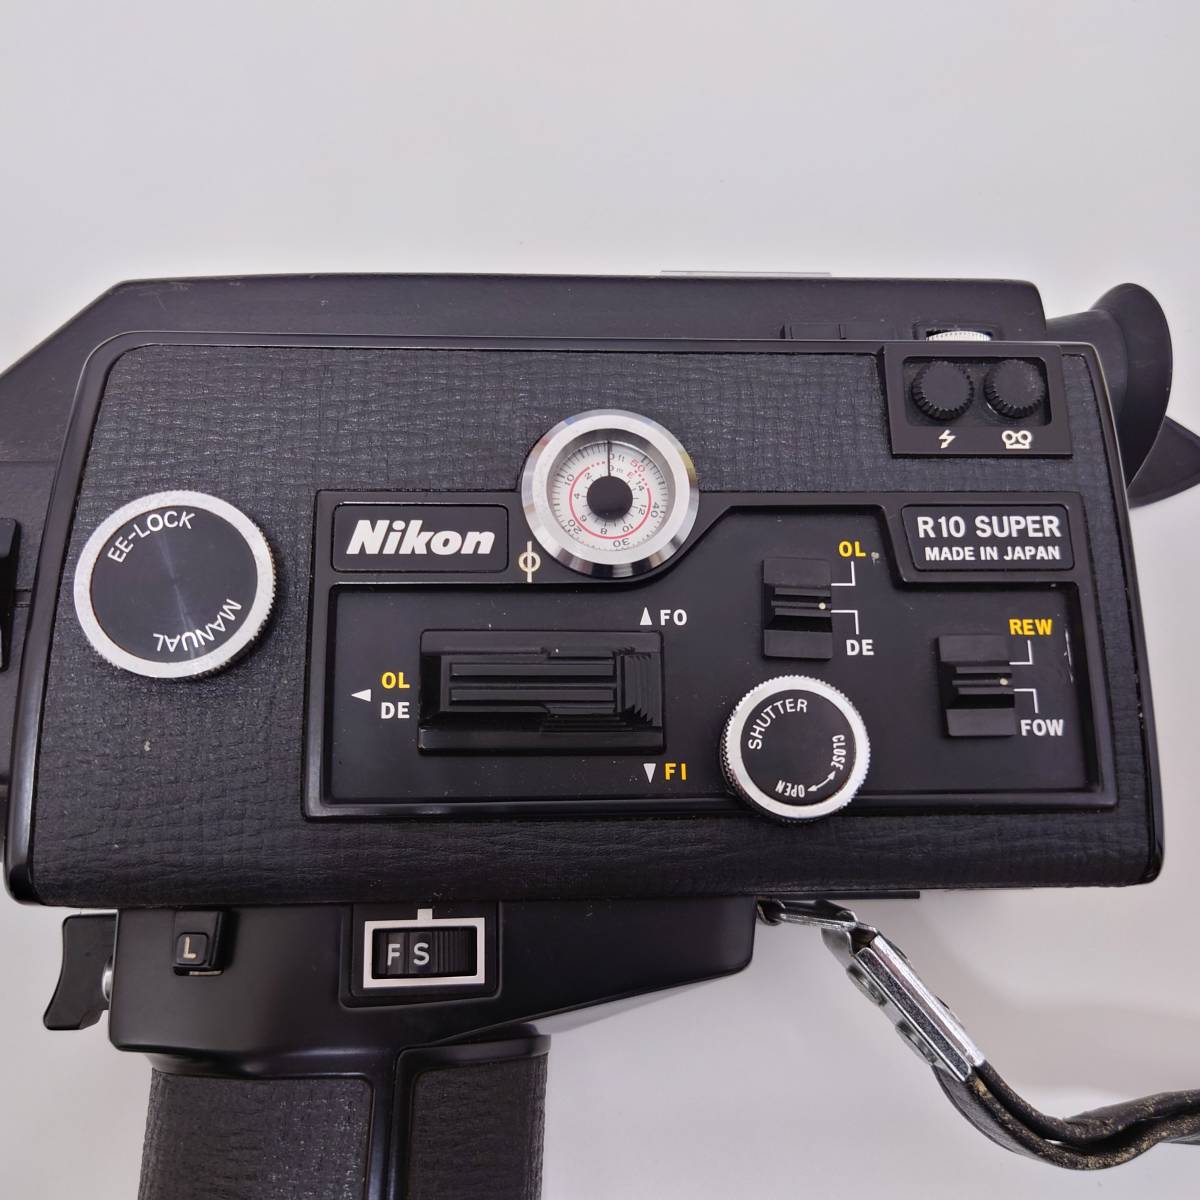 Nikon R10 SUPER ZOOM ニコン 8mmフィルムカメラ カタログ 説明書付(8 